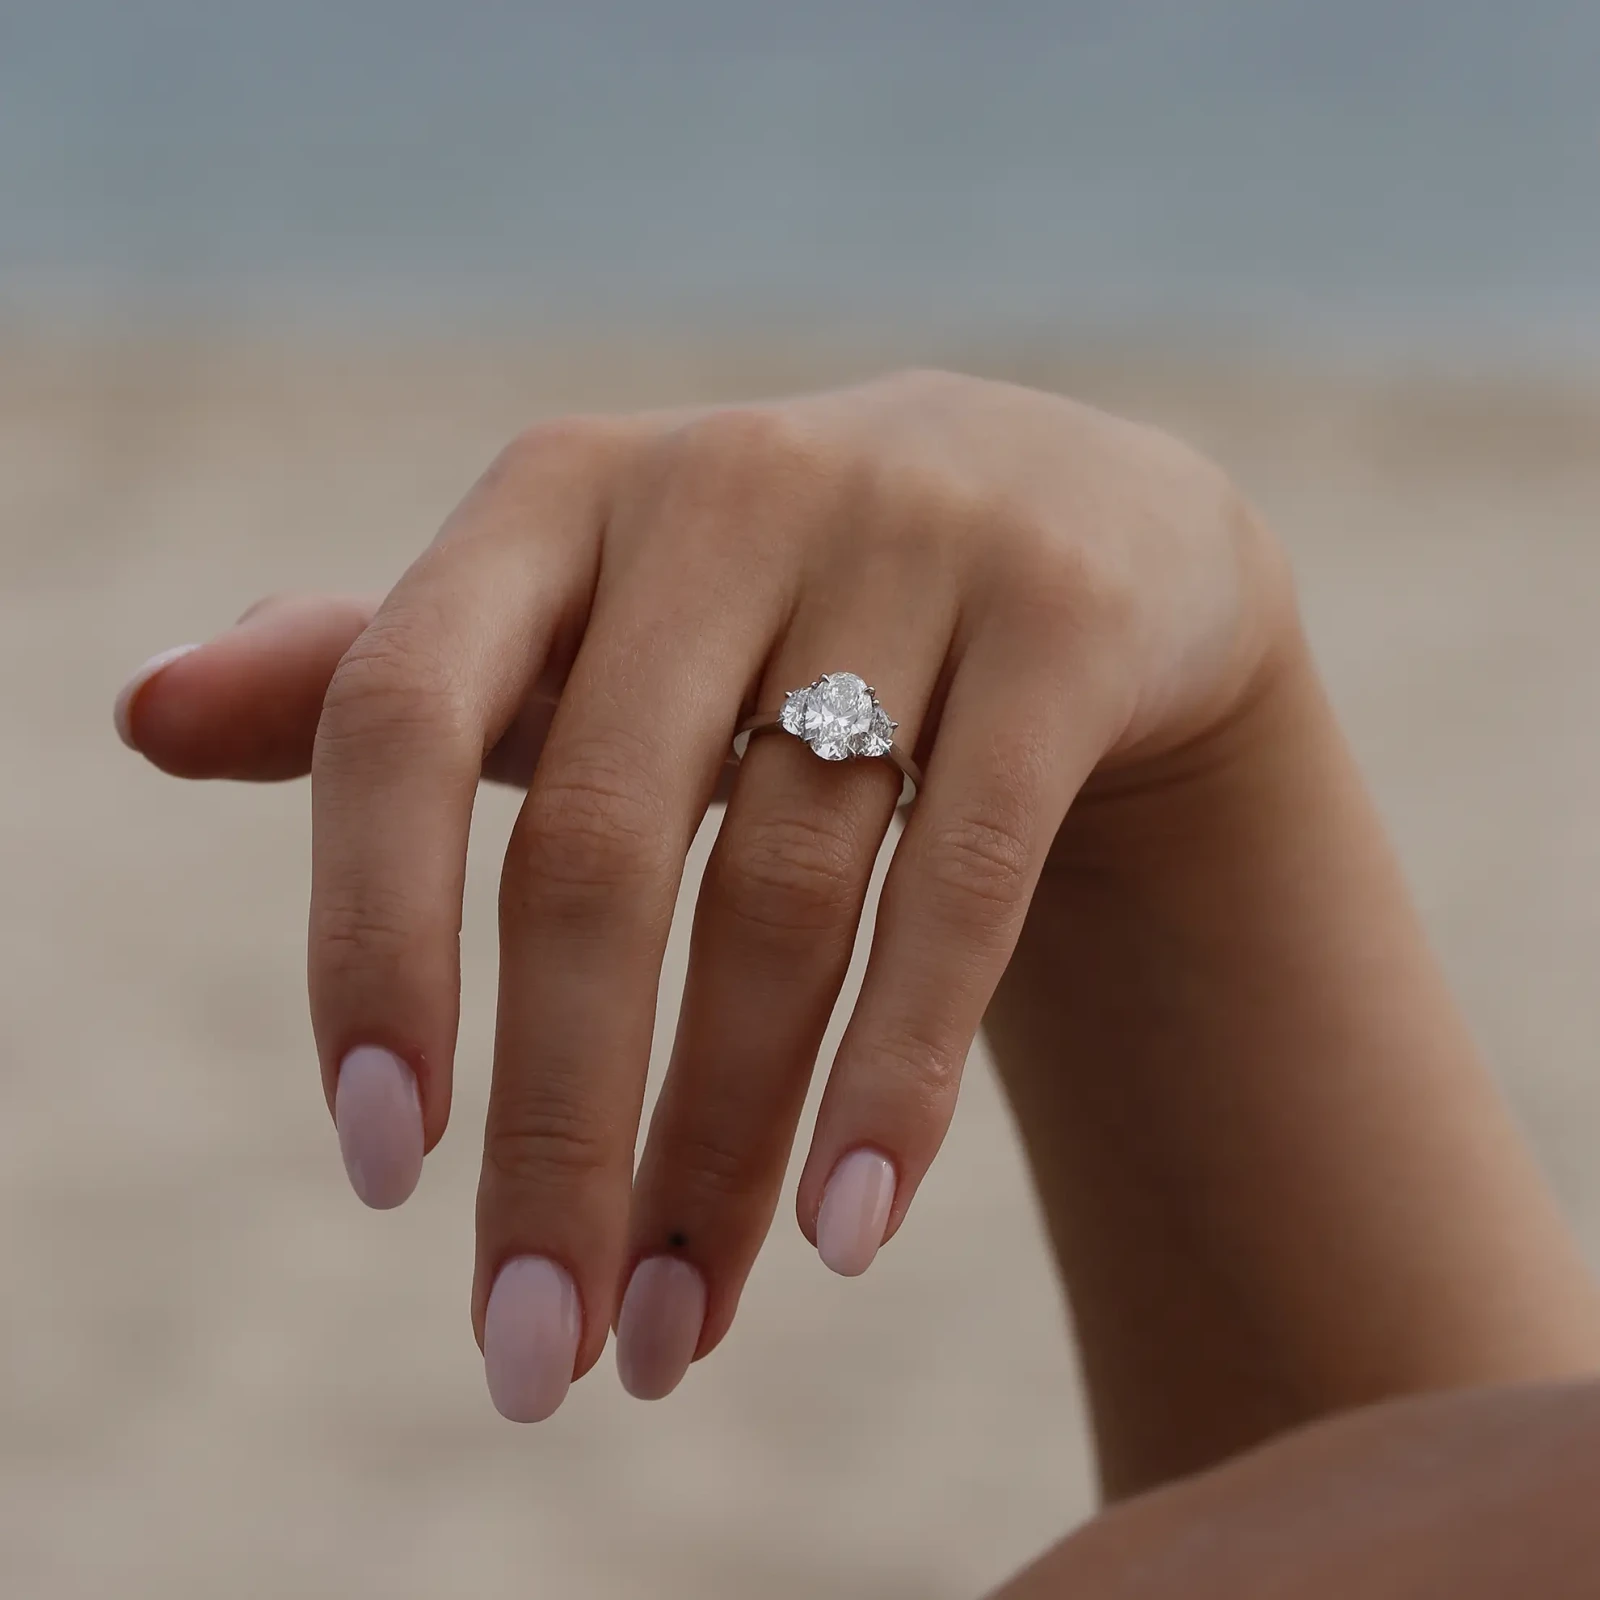 Three Stone Oval Diamond Engagement Ring with Half-Moon Diamonds